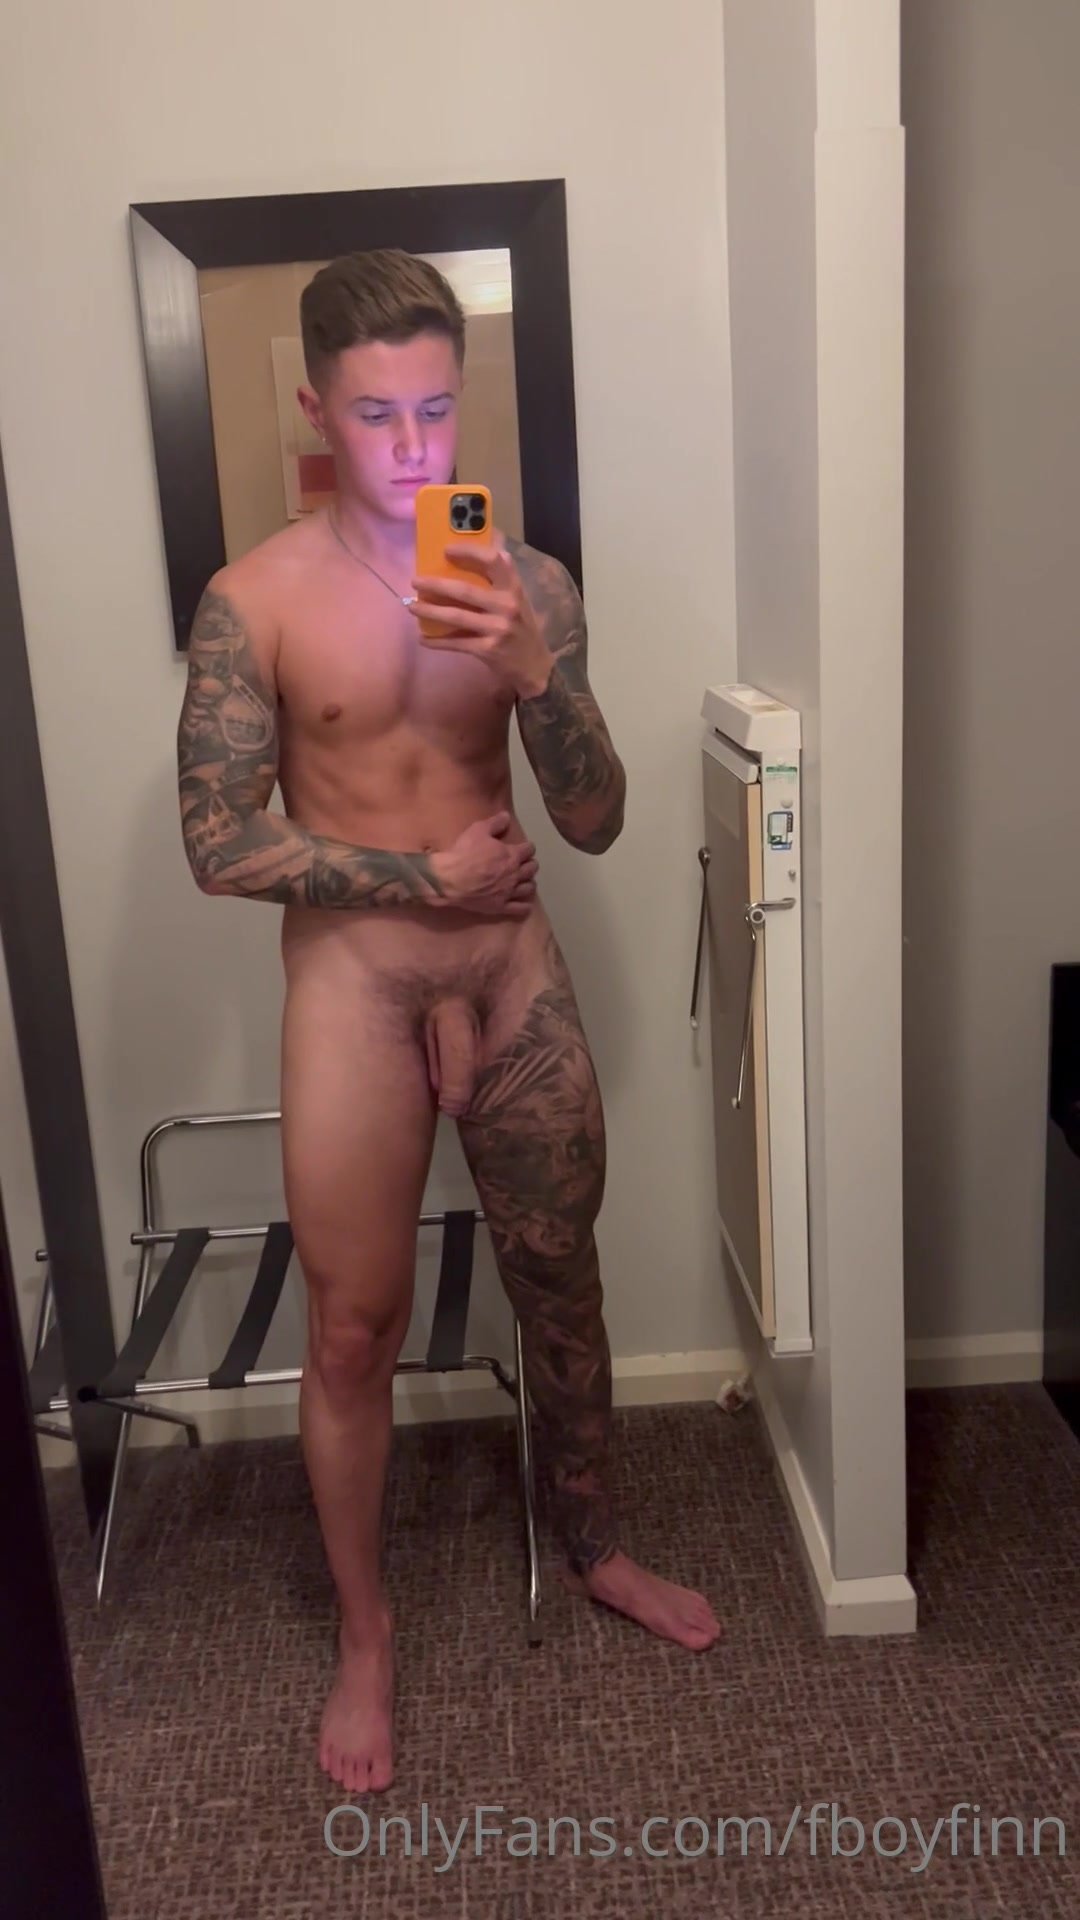 Sexy great boy showing amazing body - ThisVid.com 